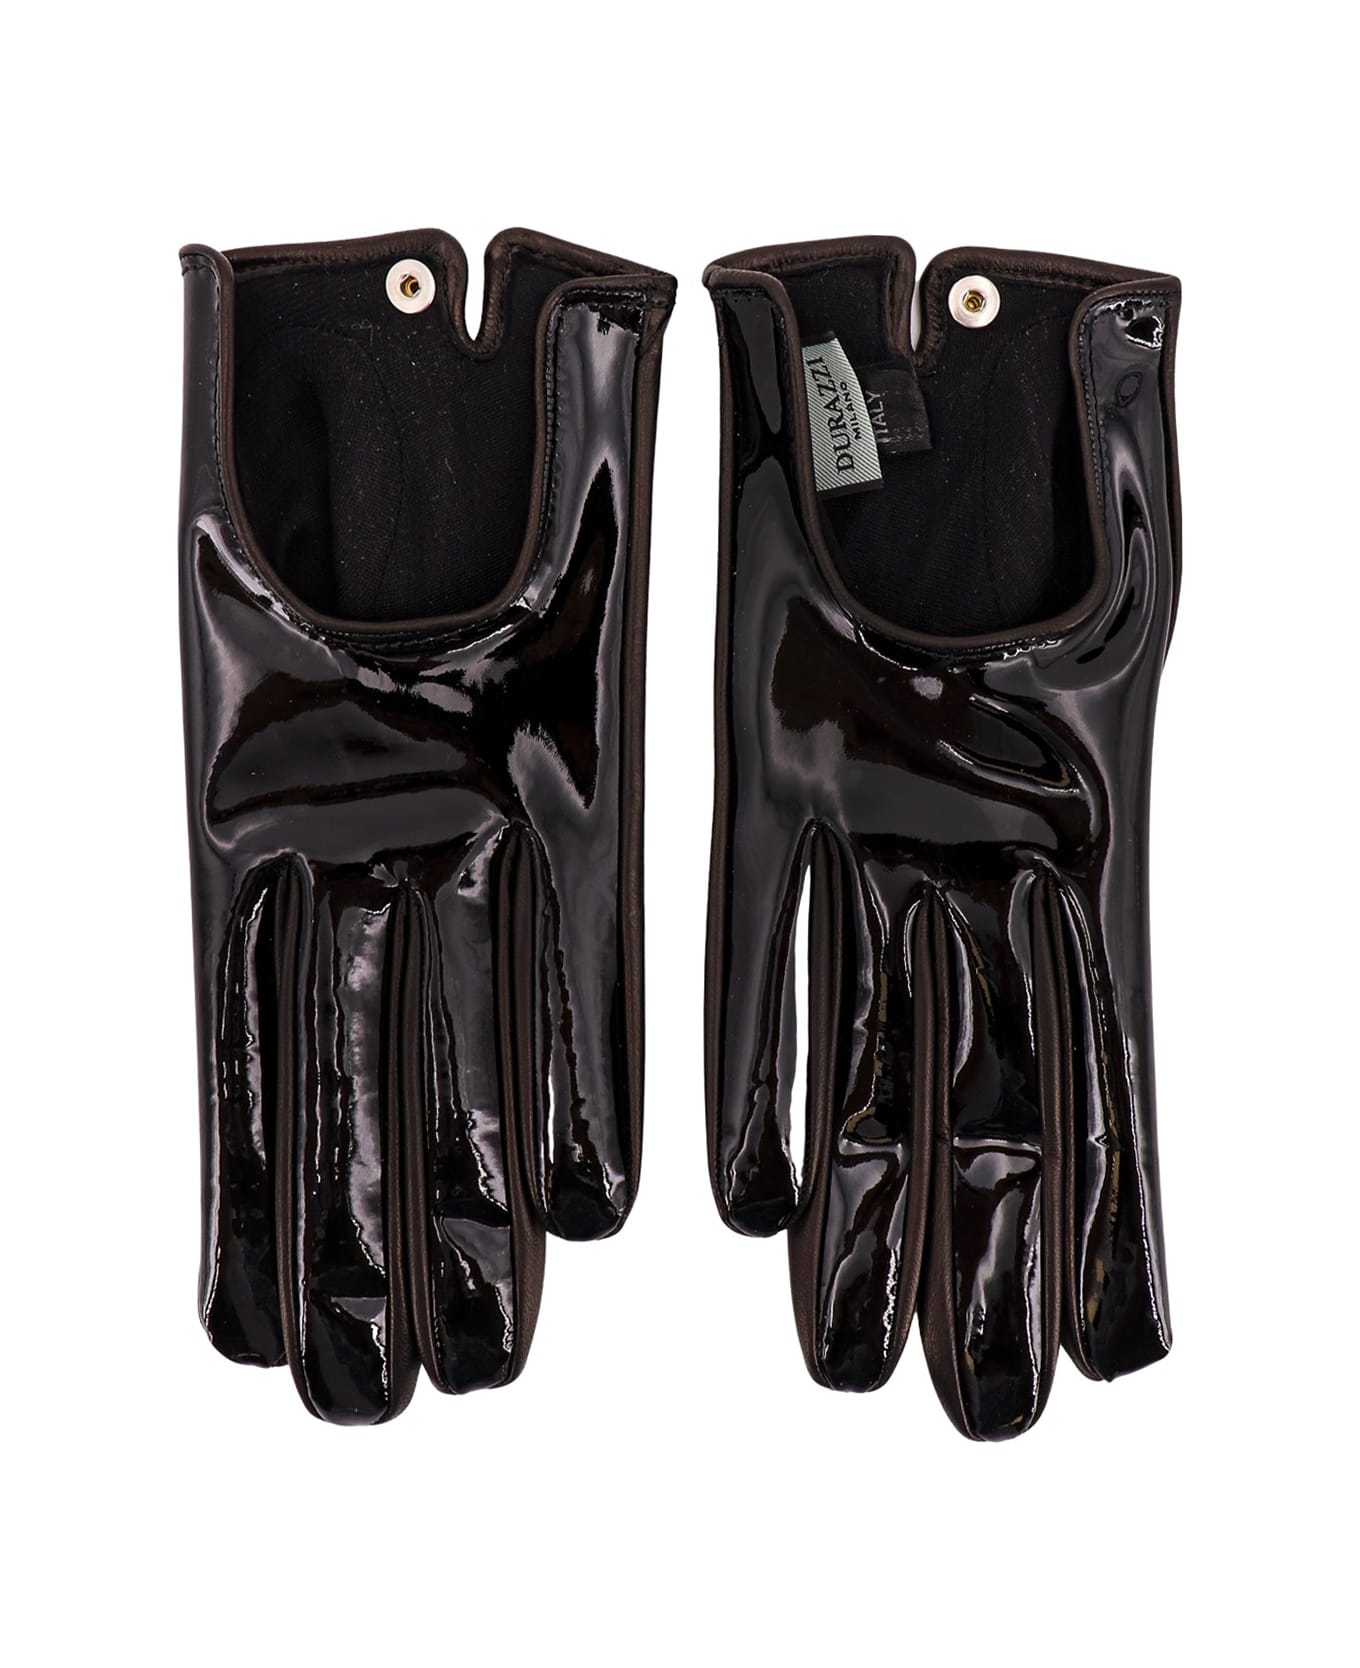 Durazzi Milano Gloves - Black